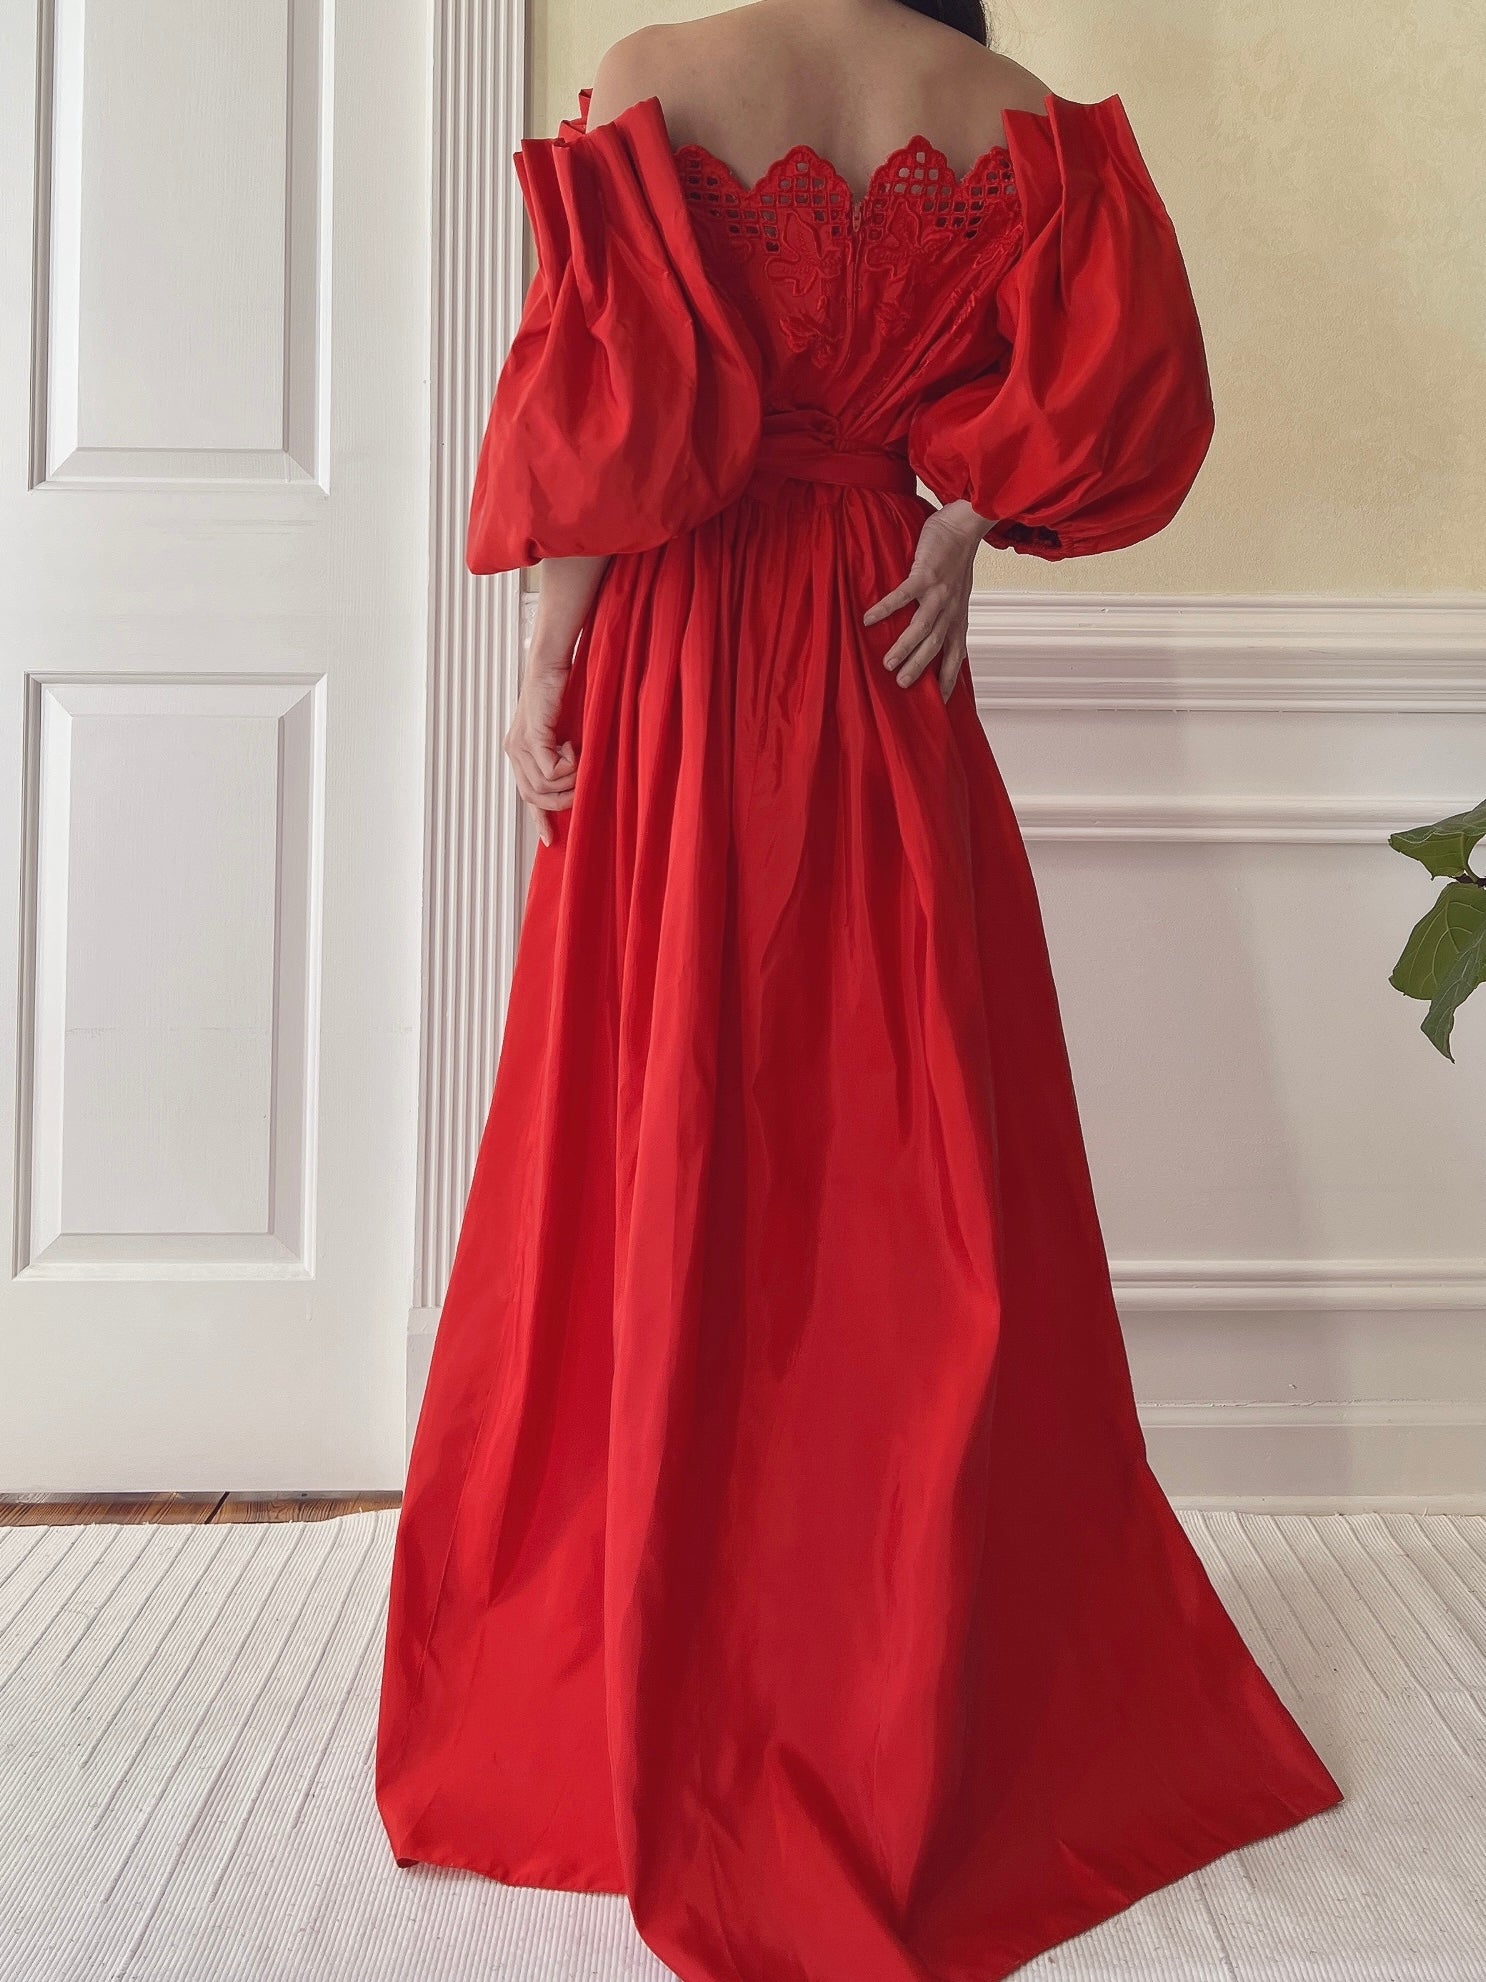 Vintage Red Taffeta Puff Sleeve Dress - S